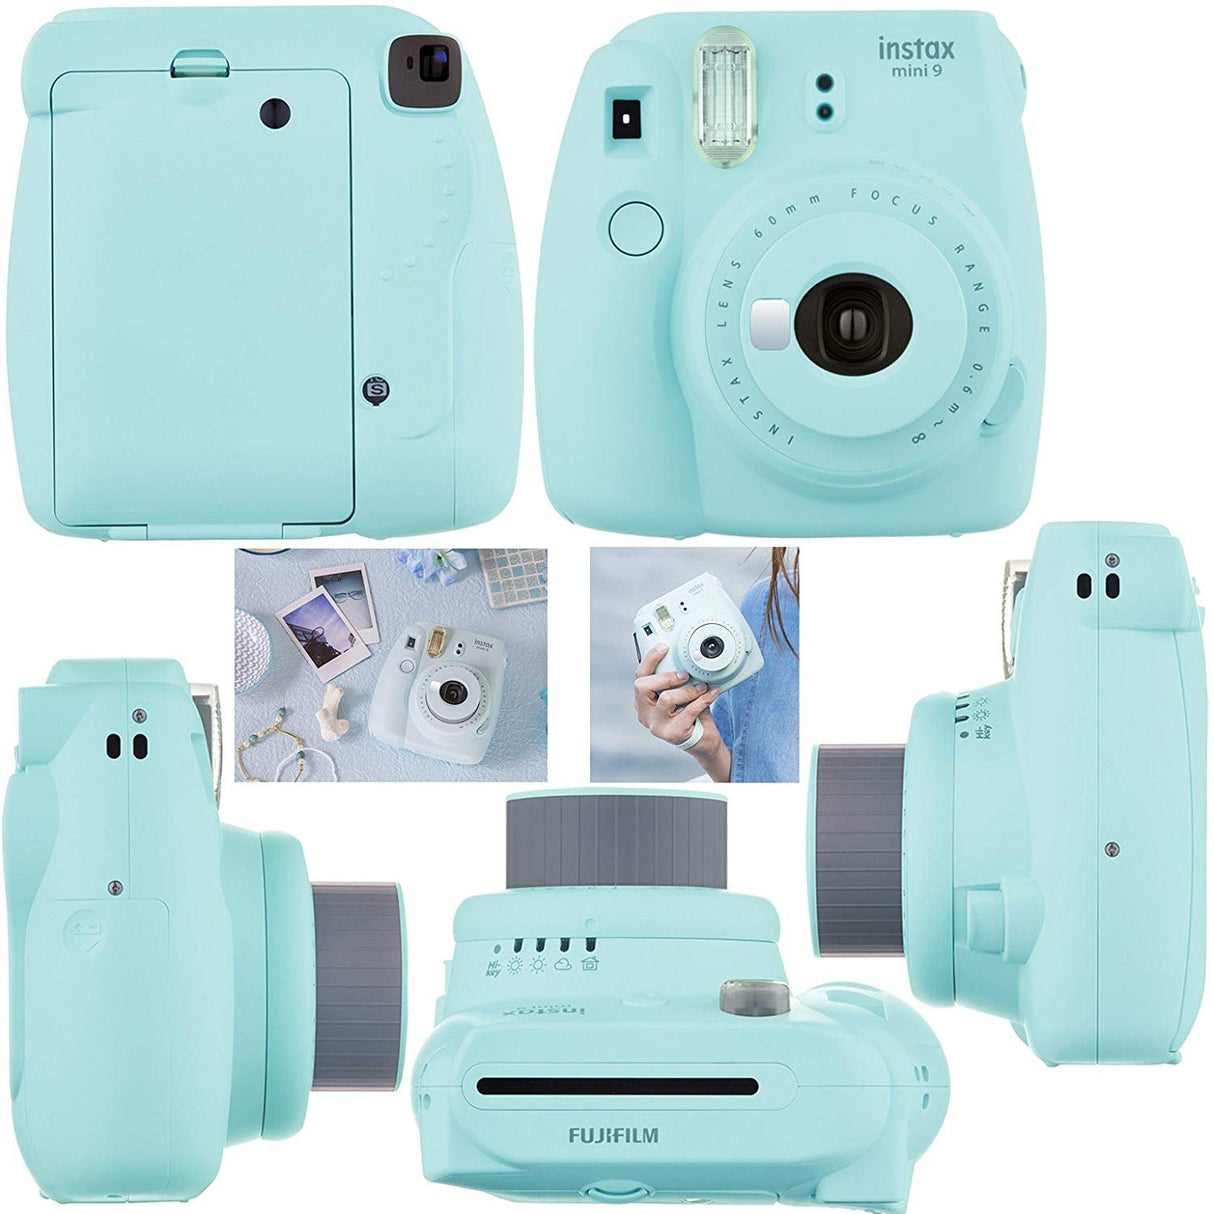 Fujifilm Instax Mini 12 Instant Camera with Case, 60 Fuji Films, Decoration  Stickers, Frames, Photo Album and More Accessory kit (Clay White)